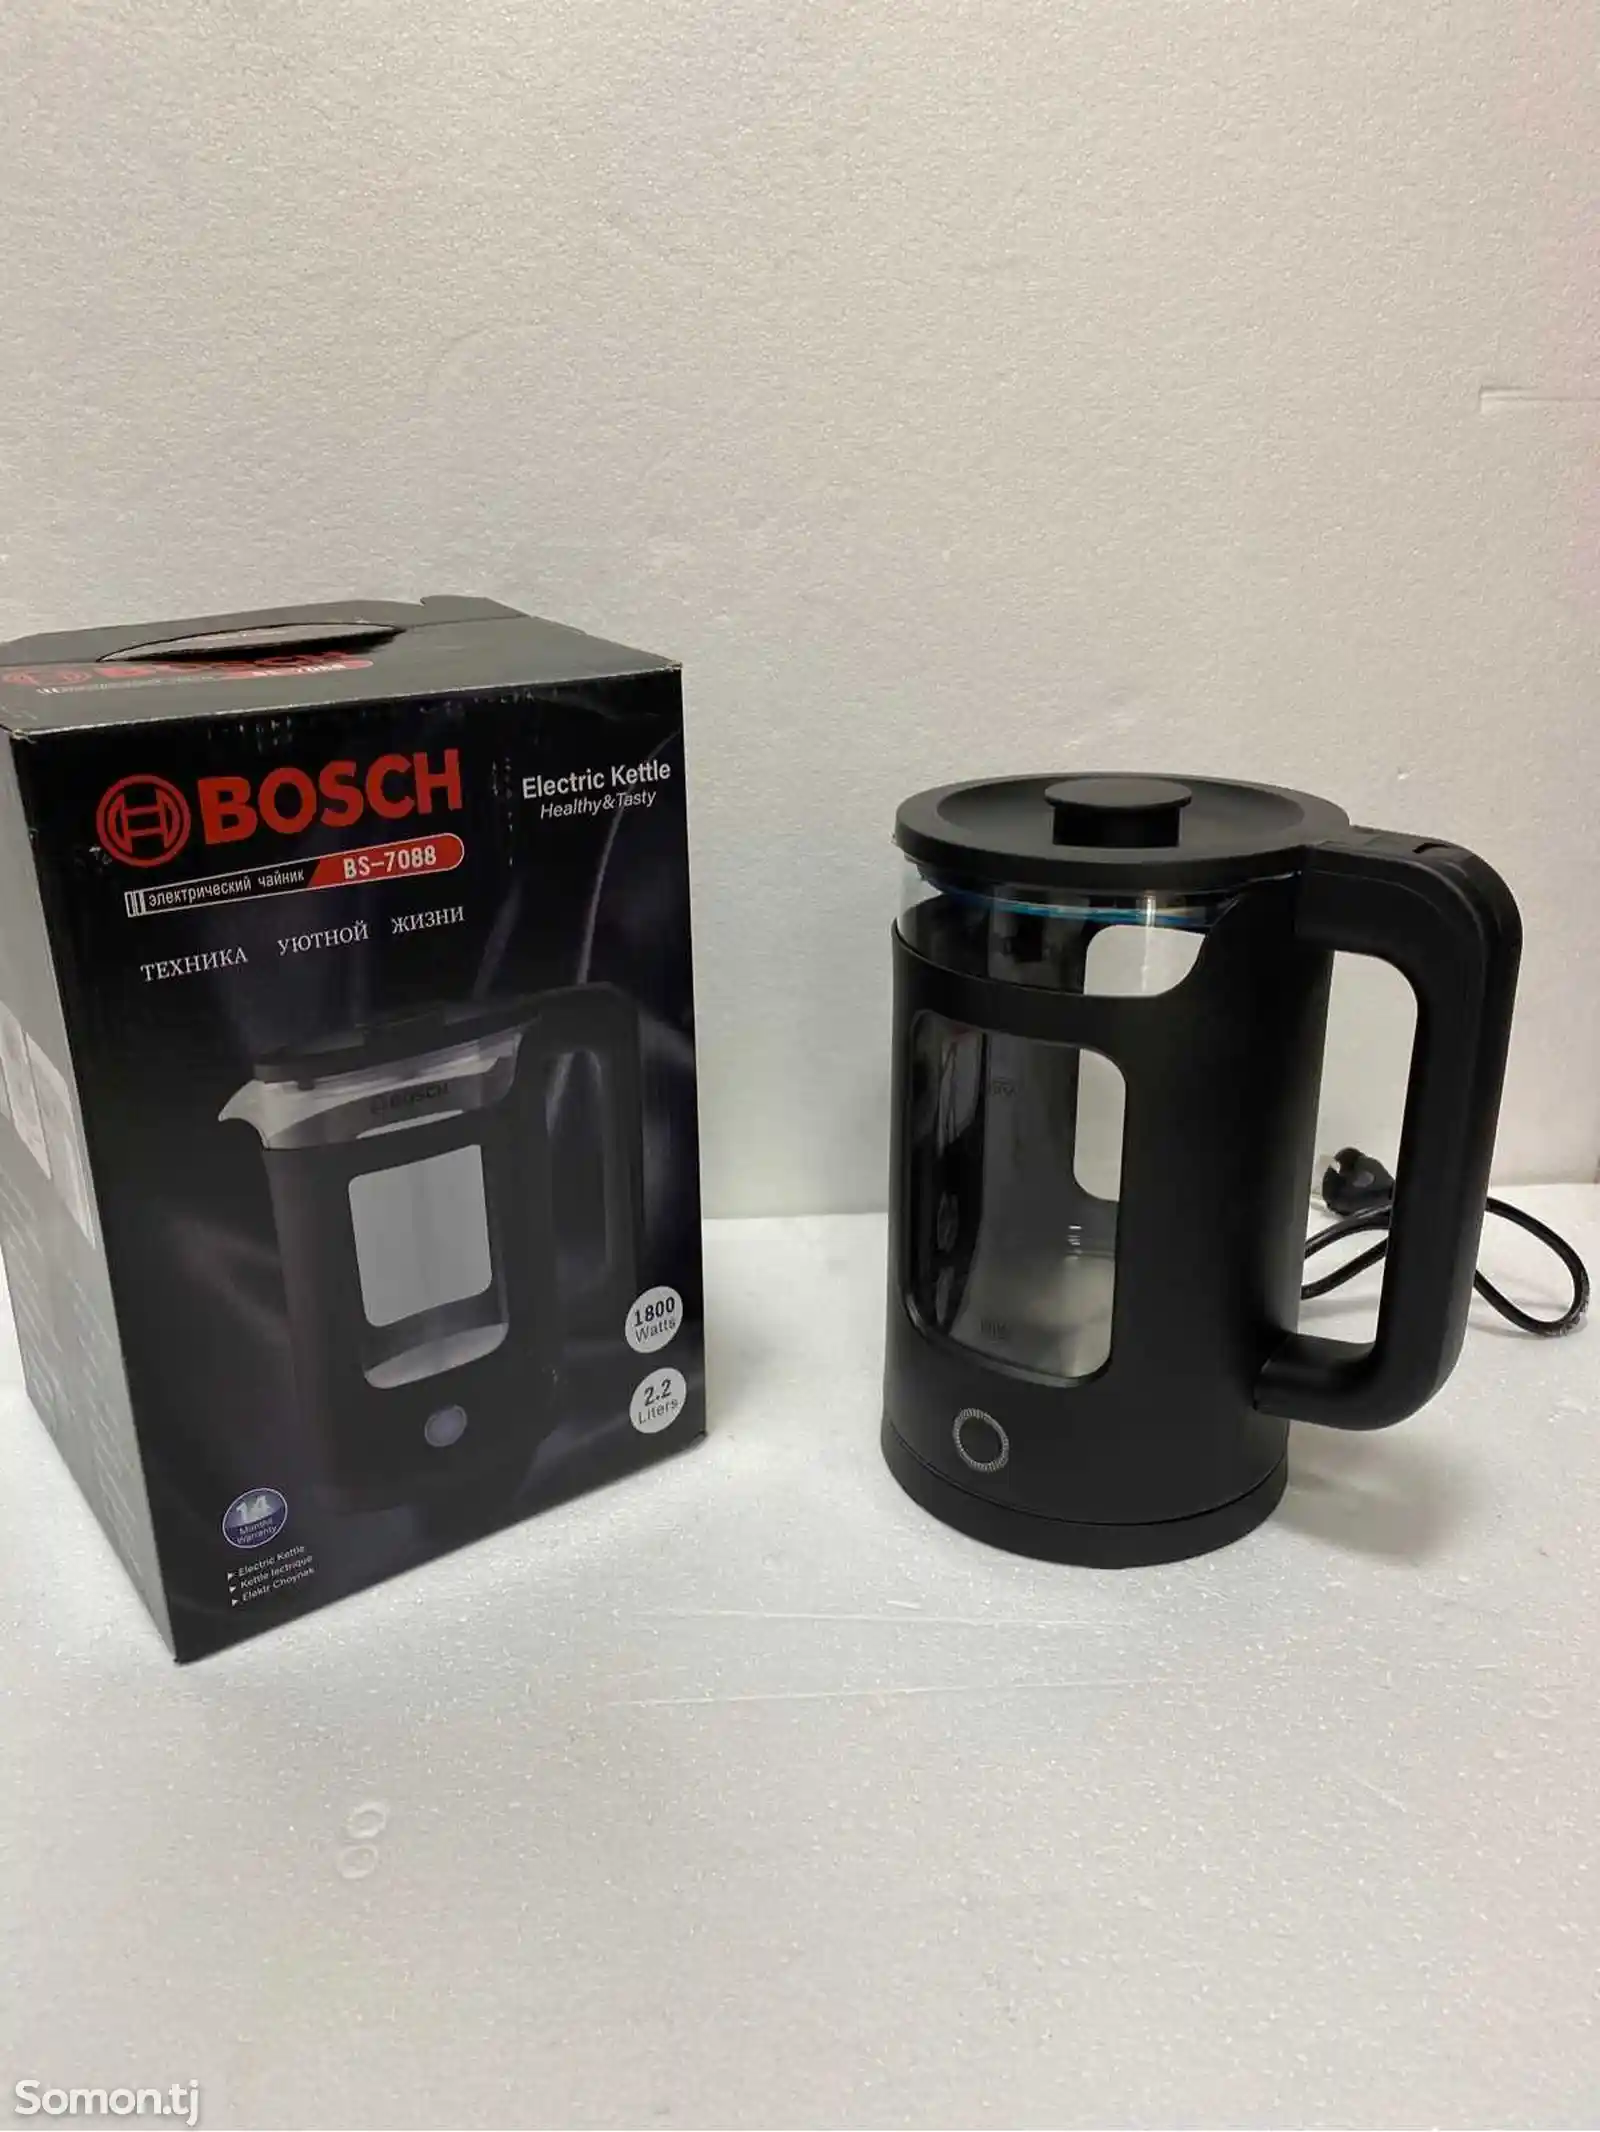 Электрочайник Bosch 2.2L Bs-7088-1